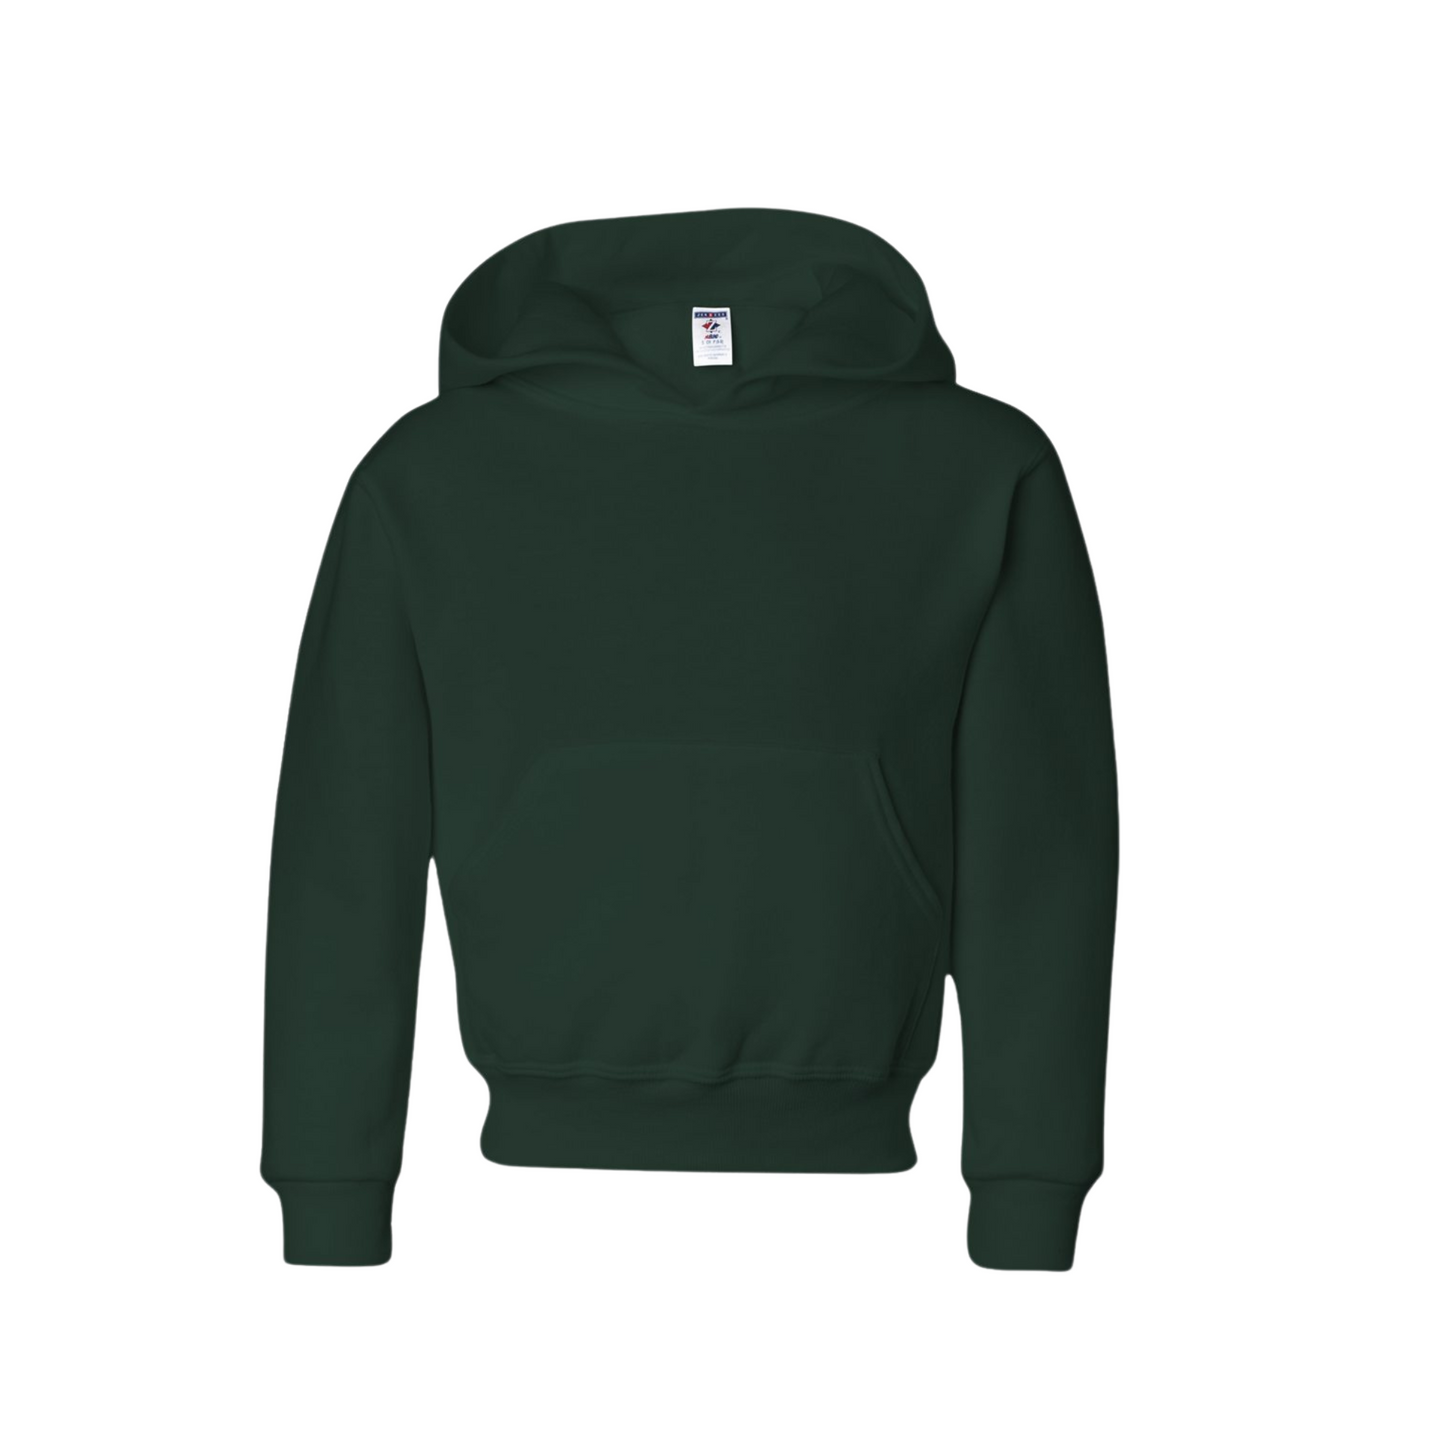 forest green hooded sweatshirt